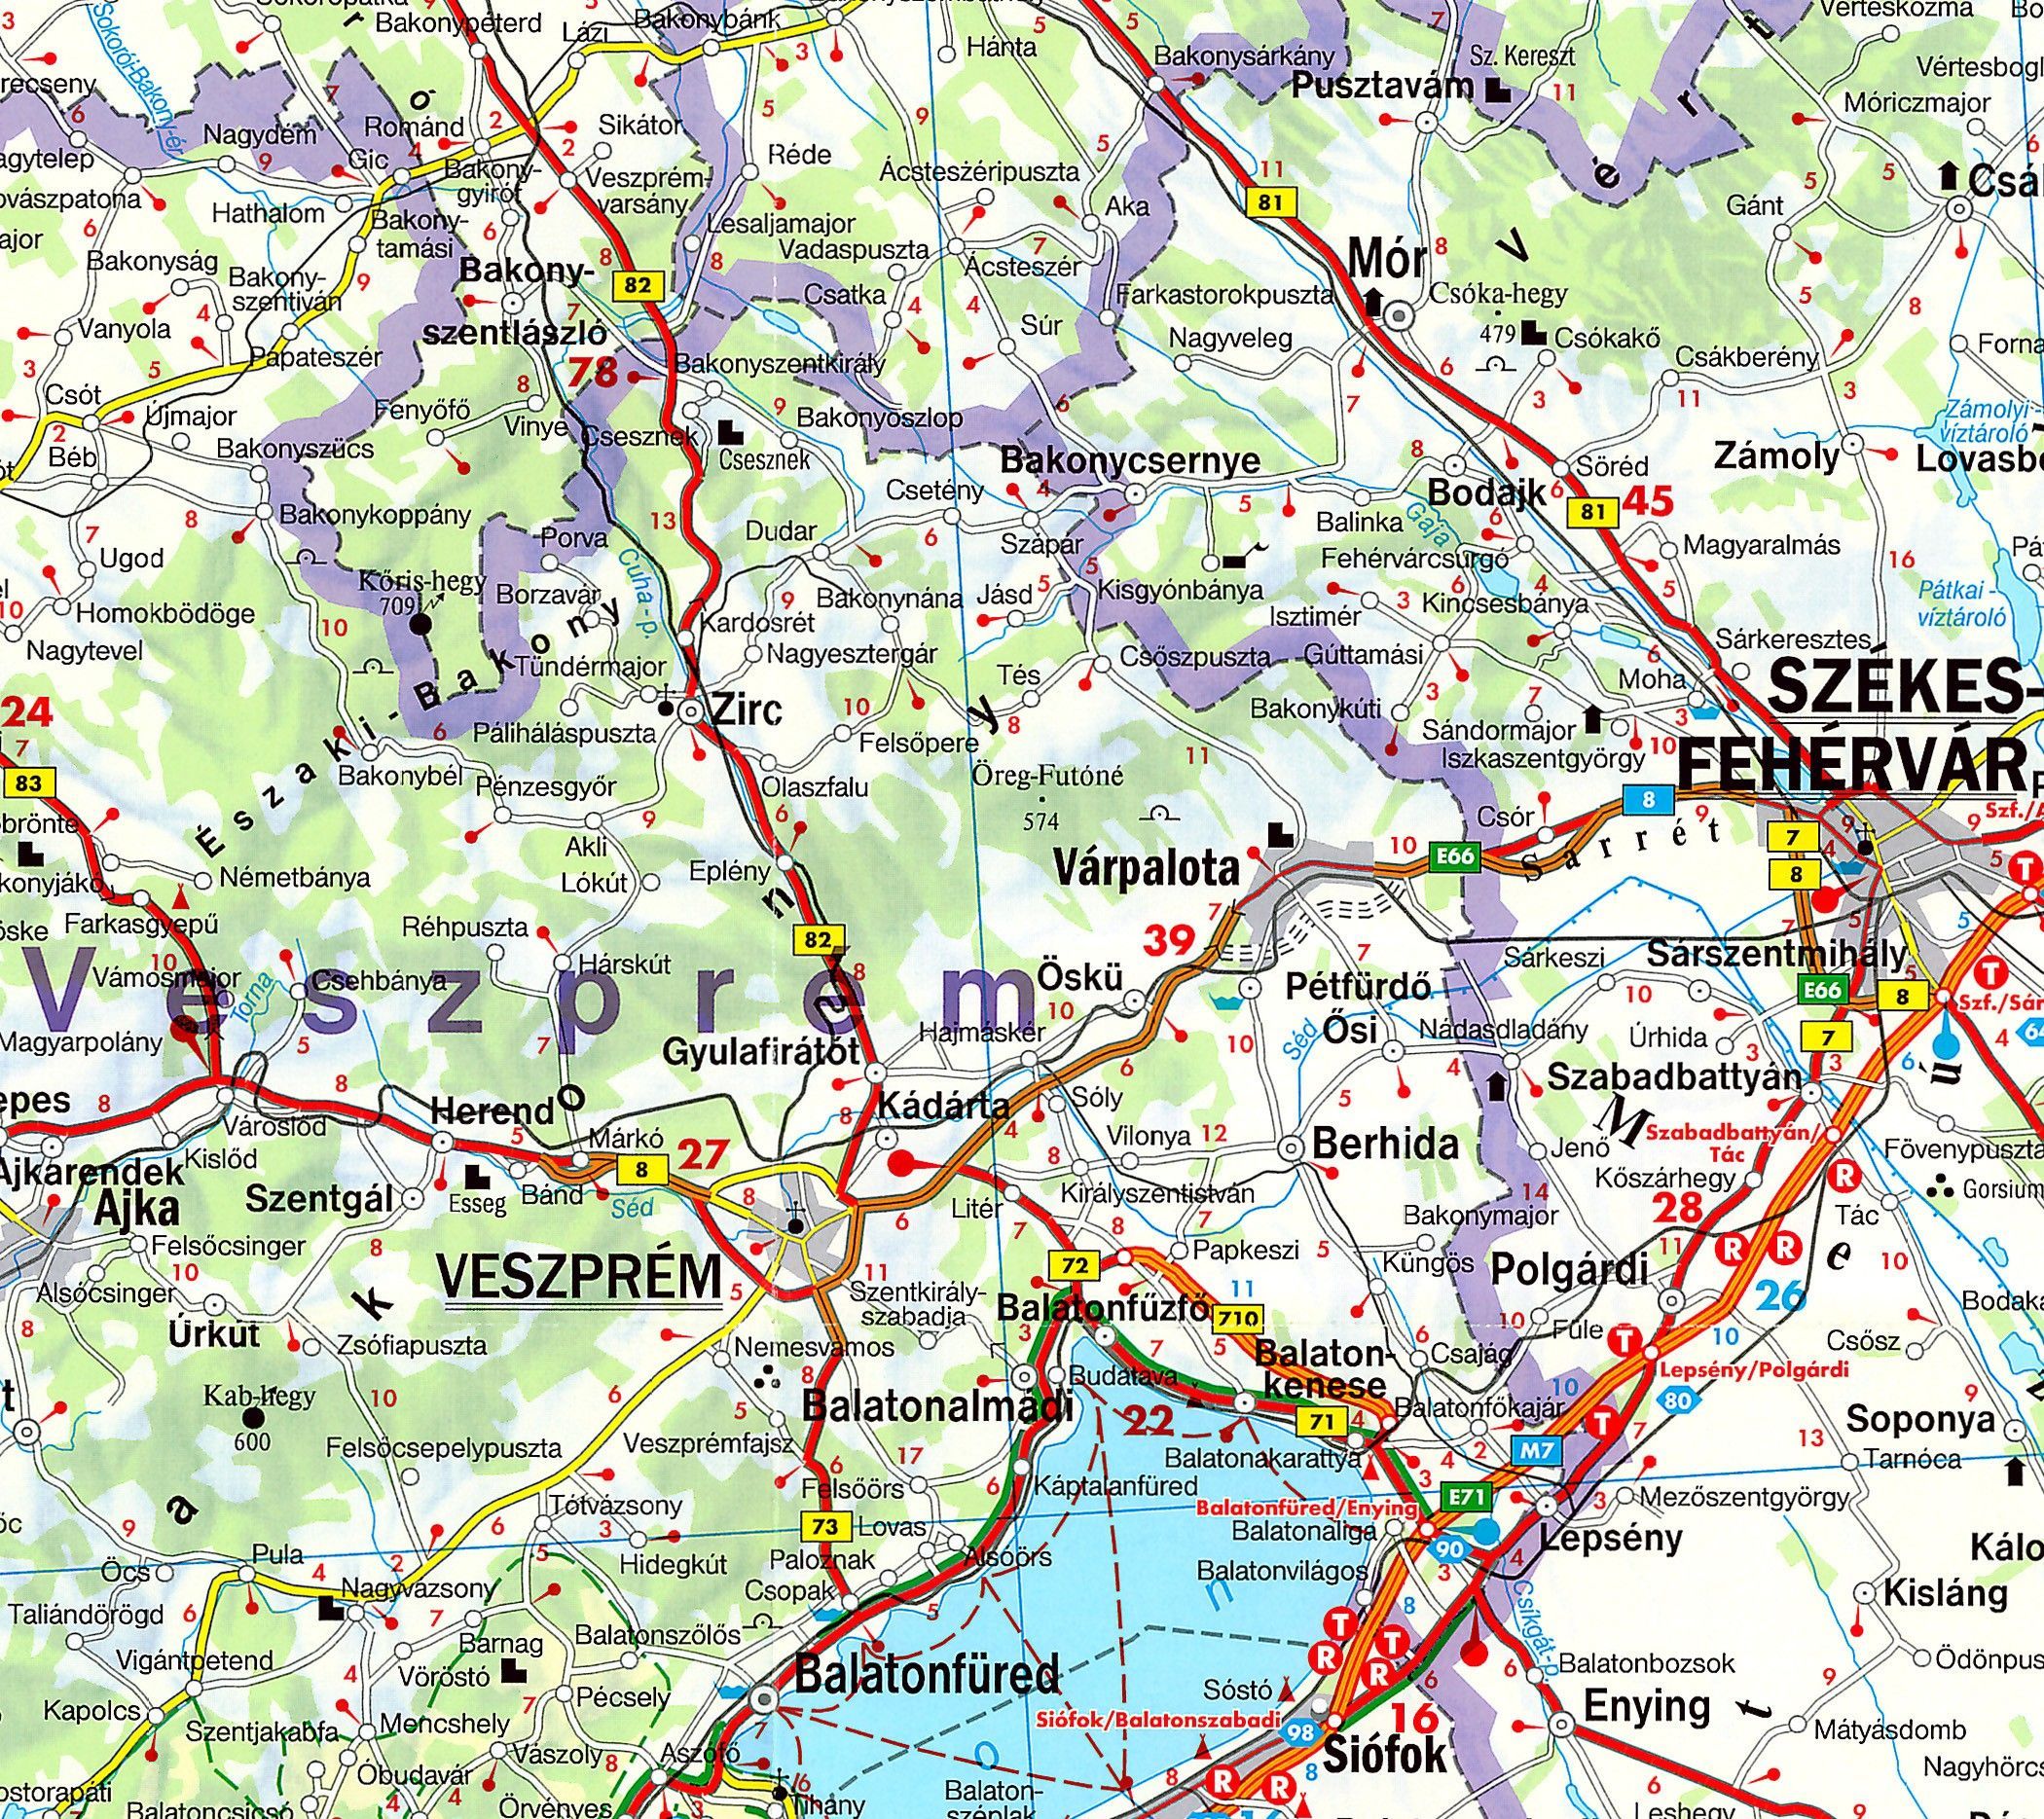 Landkaart Hongarije